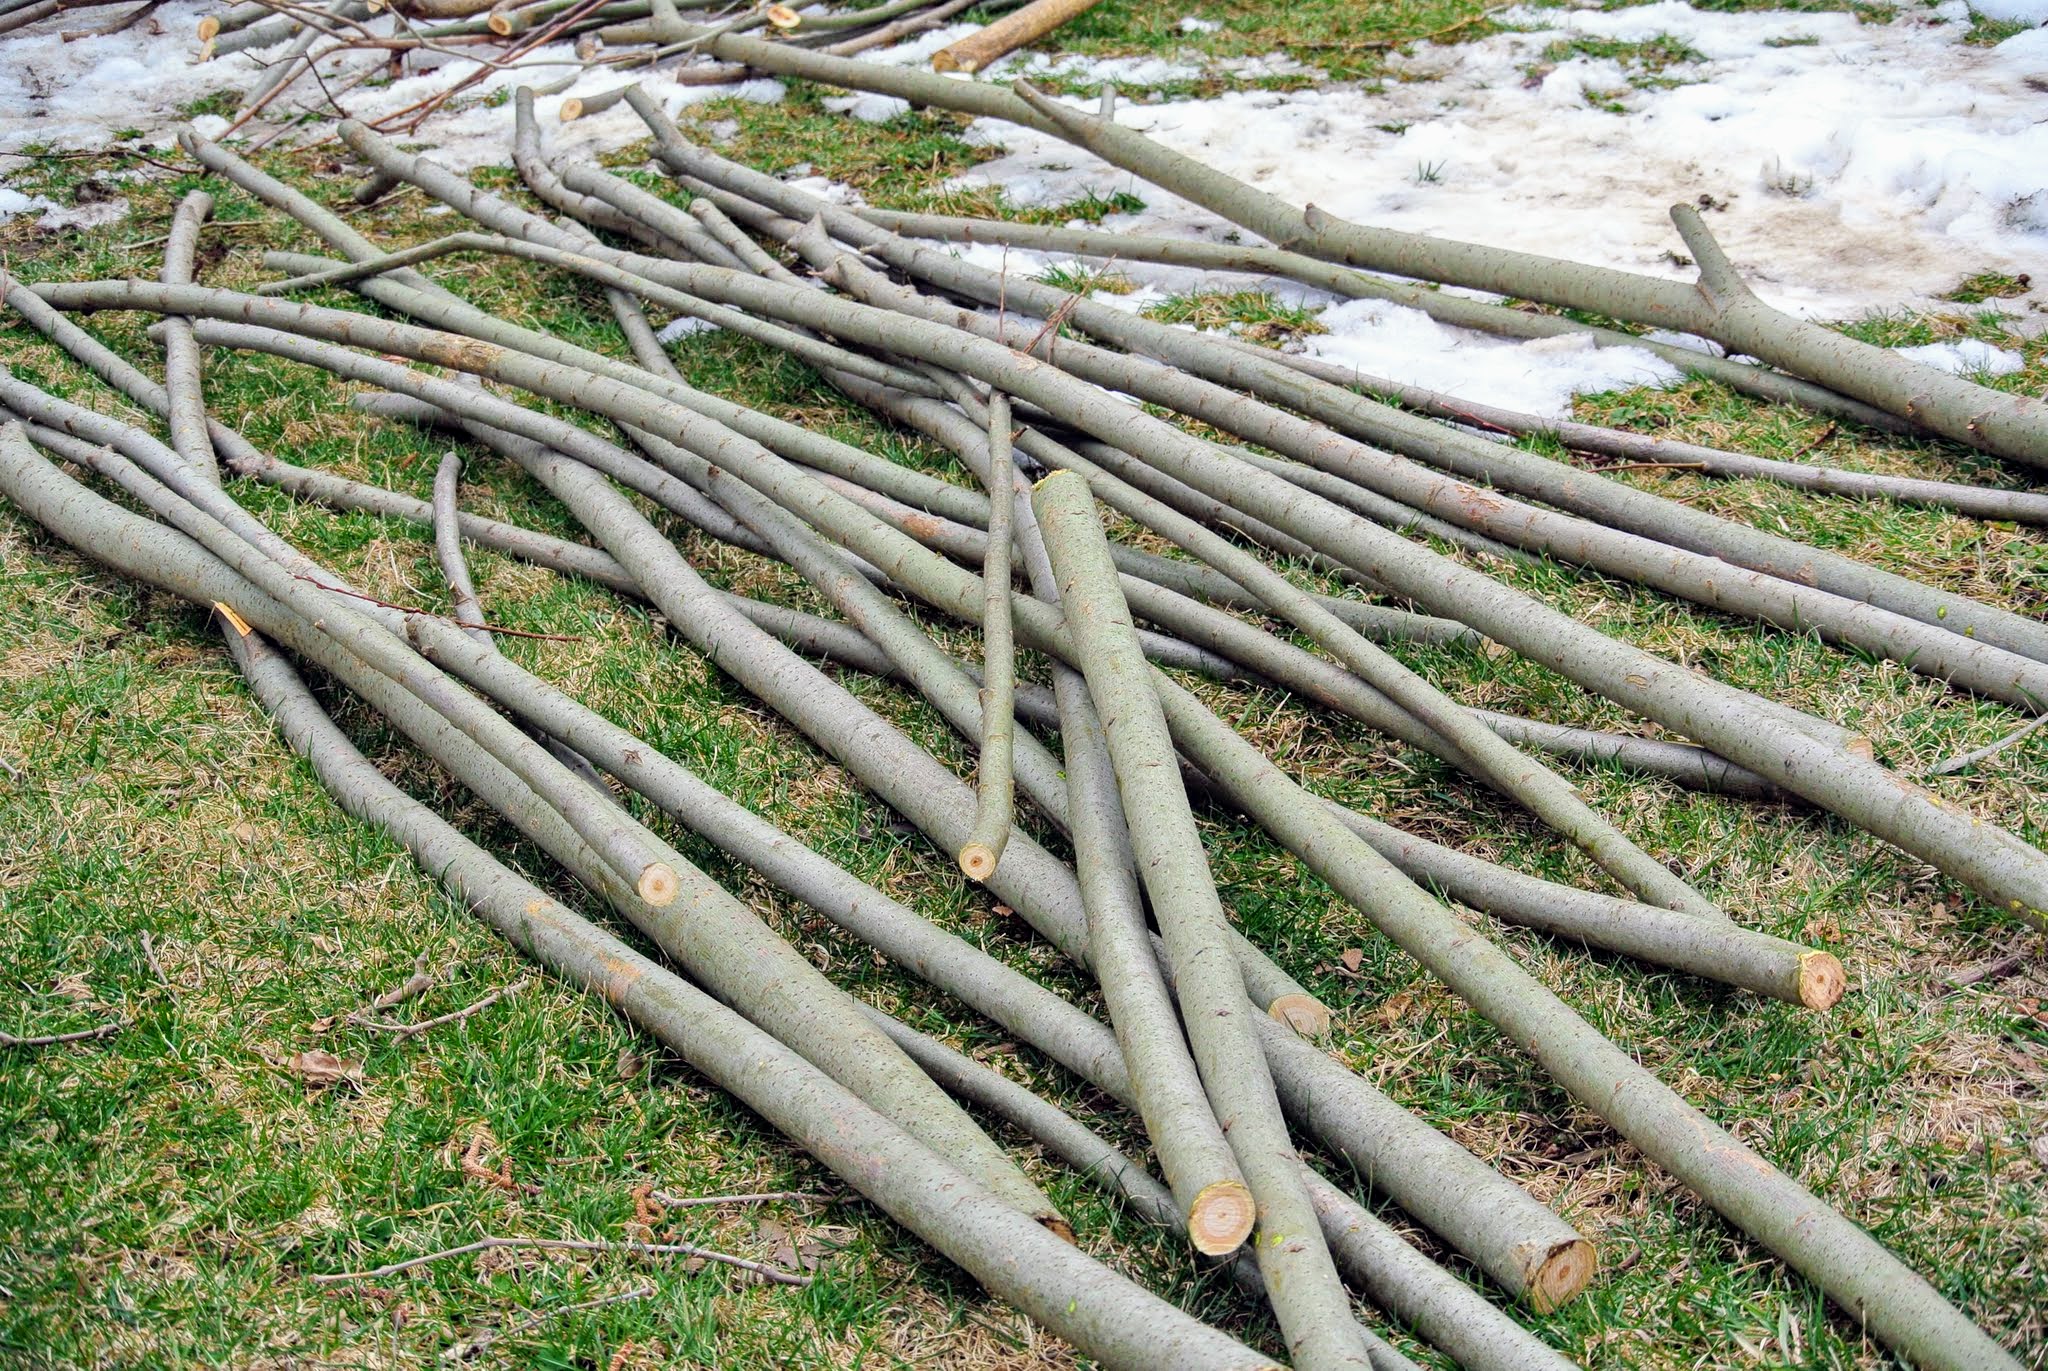 Prairie Willow Branches